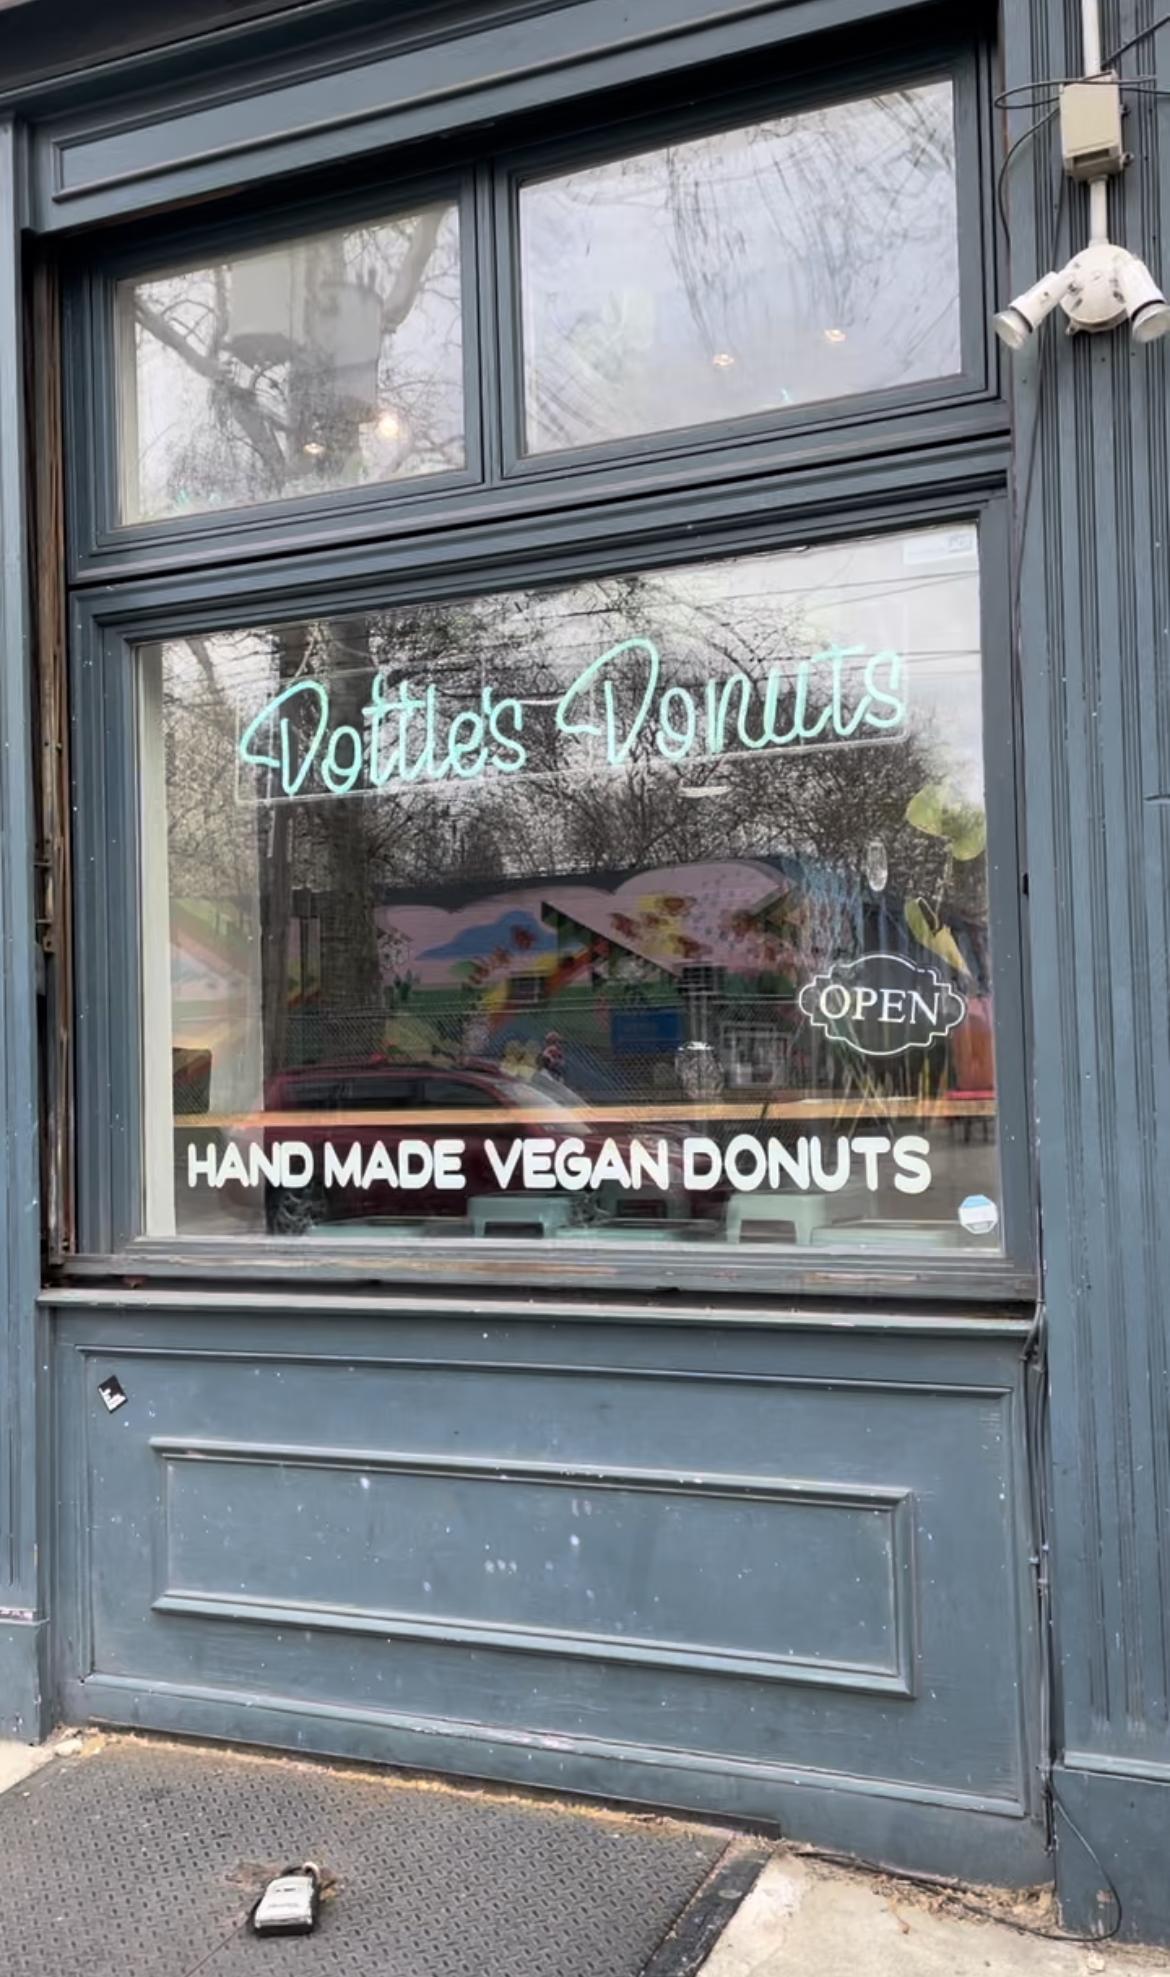 Dottie's Donuts is a vegan bakery in Philly